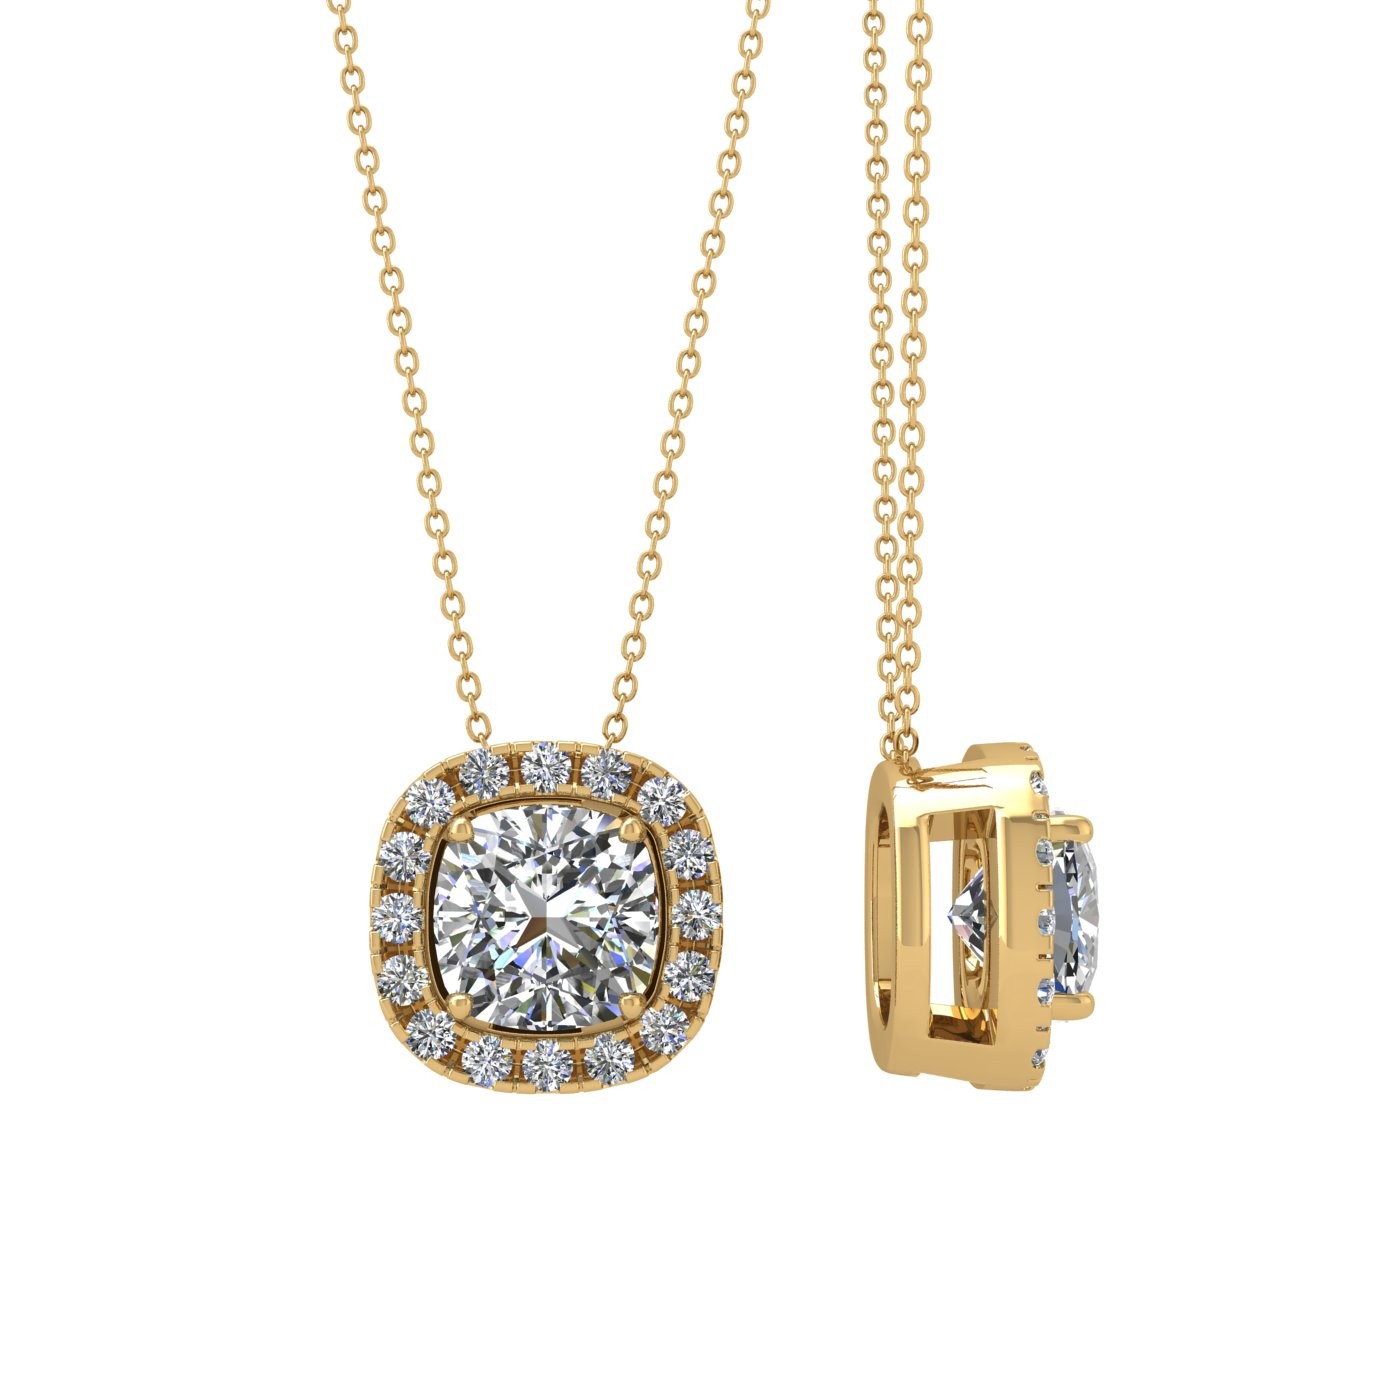 18k white gold  0,7 ct 4 prongs cushion shape diamond pendant with diamond pavÉ set halo Photos & images